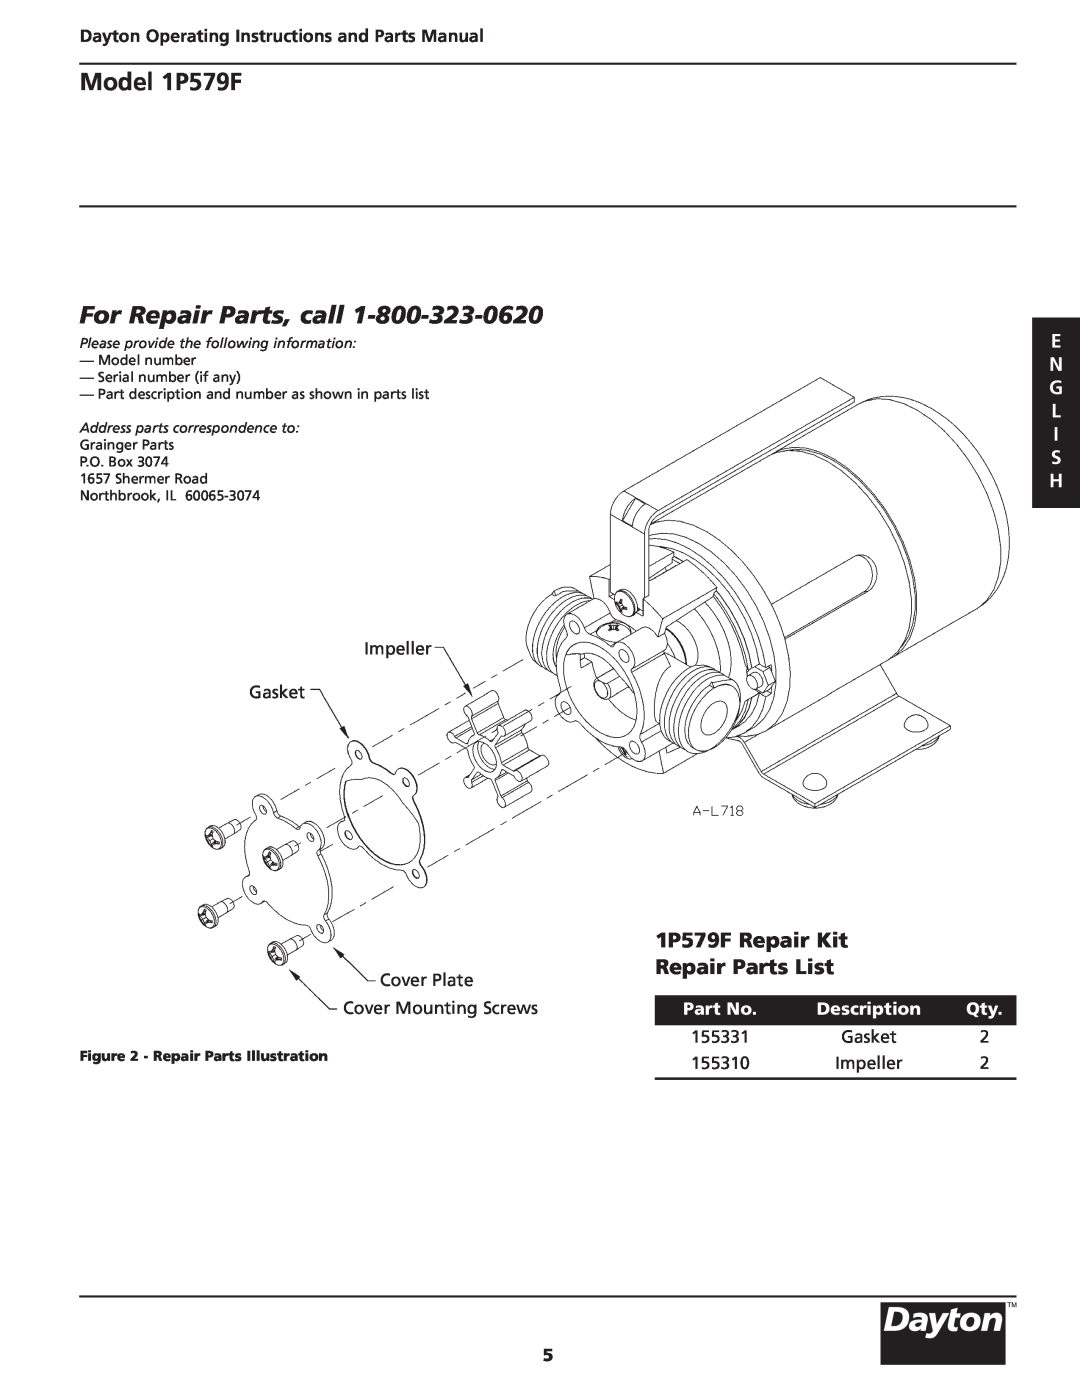 Dayton For Repair Parts, call, 1P579F Repair Kit Repair Parts List, E N G L I S H, Description, Model 1P579F 